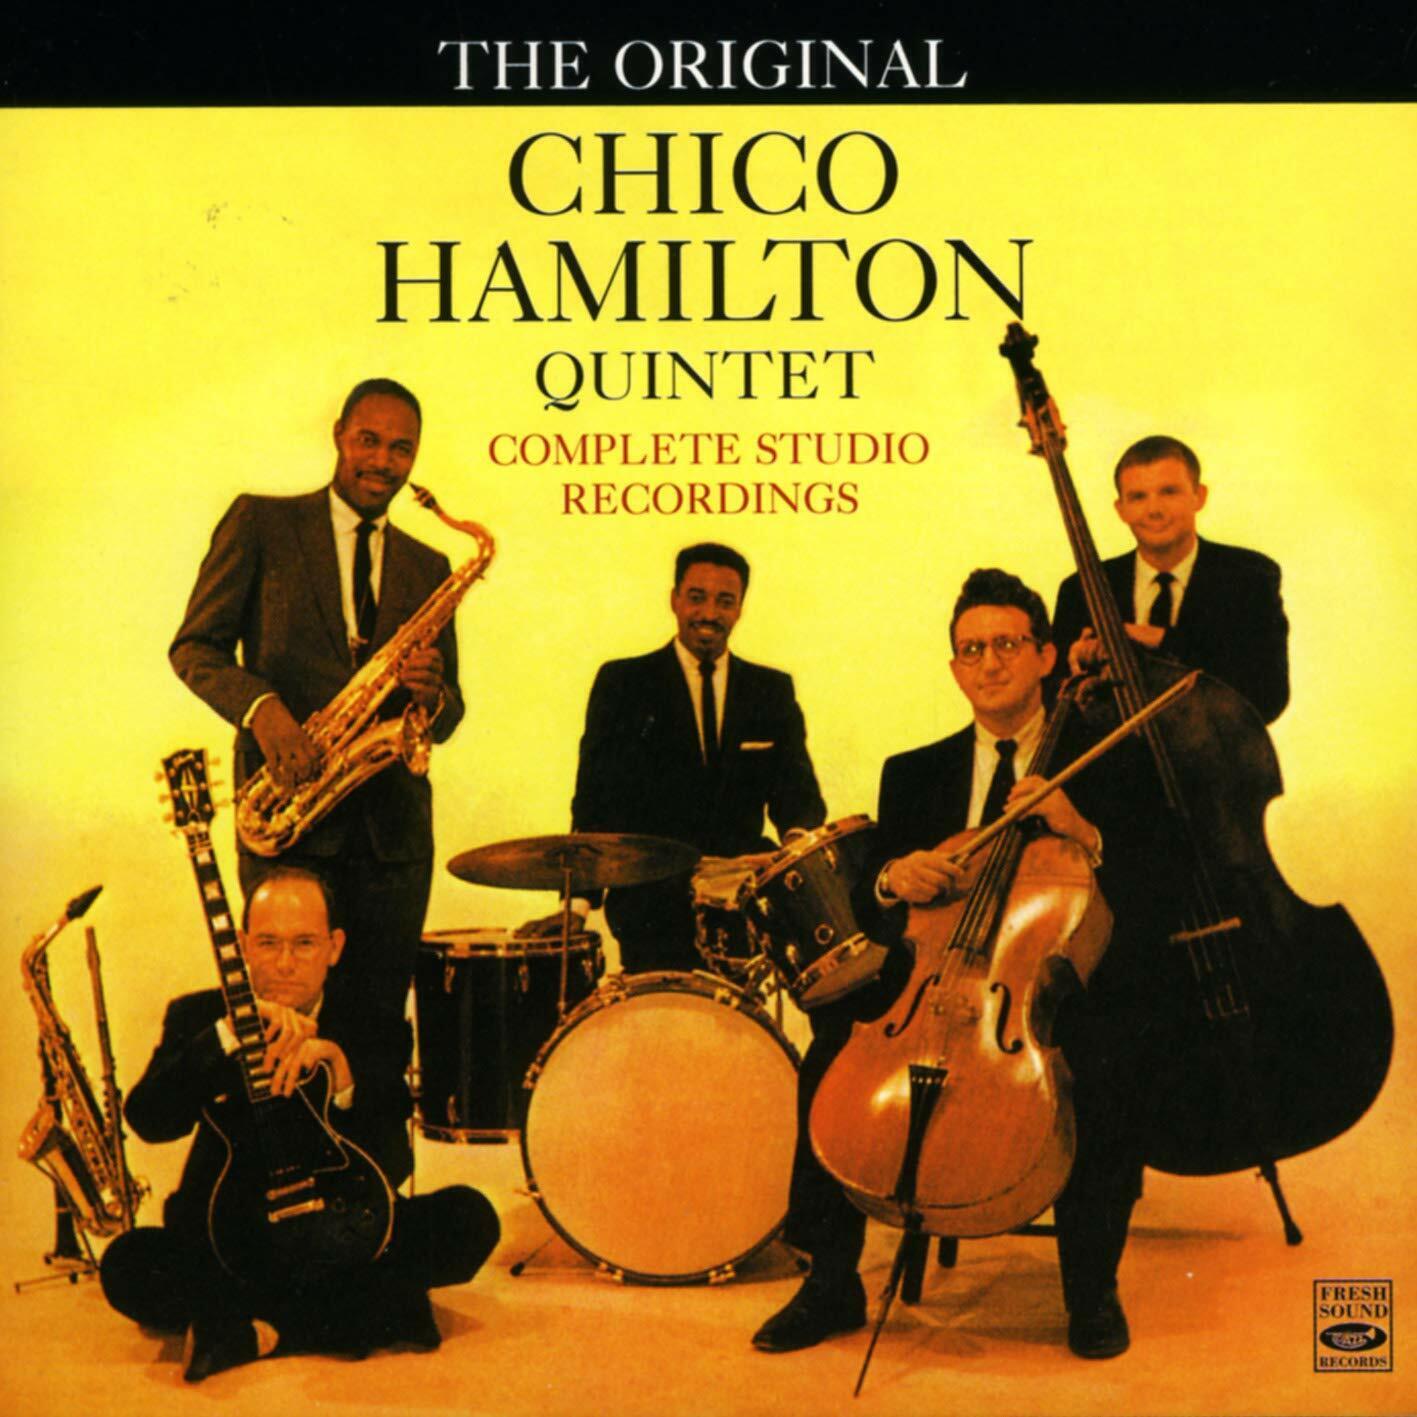 Chico Hamilton The Original Chico Hamilton Quintet Complete Studio Recordings